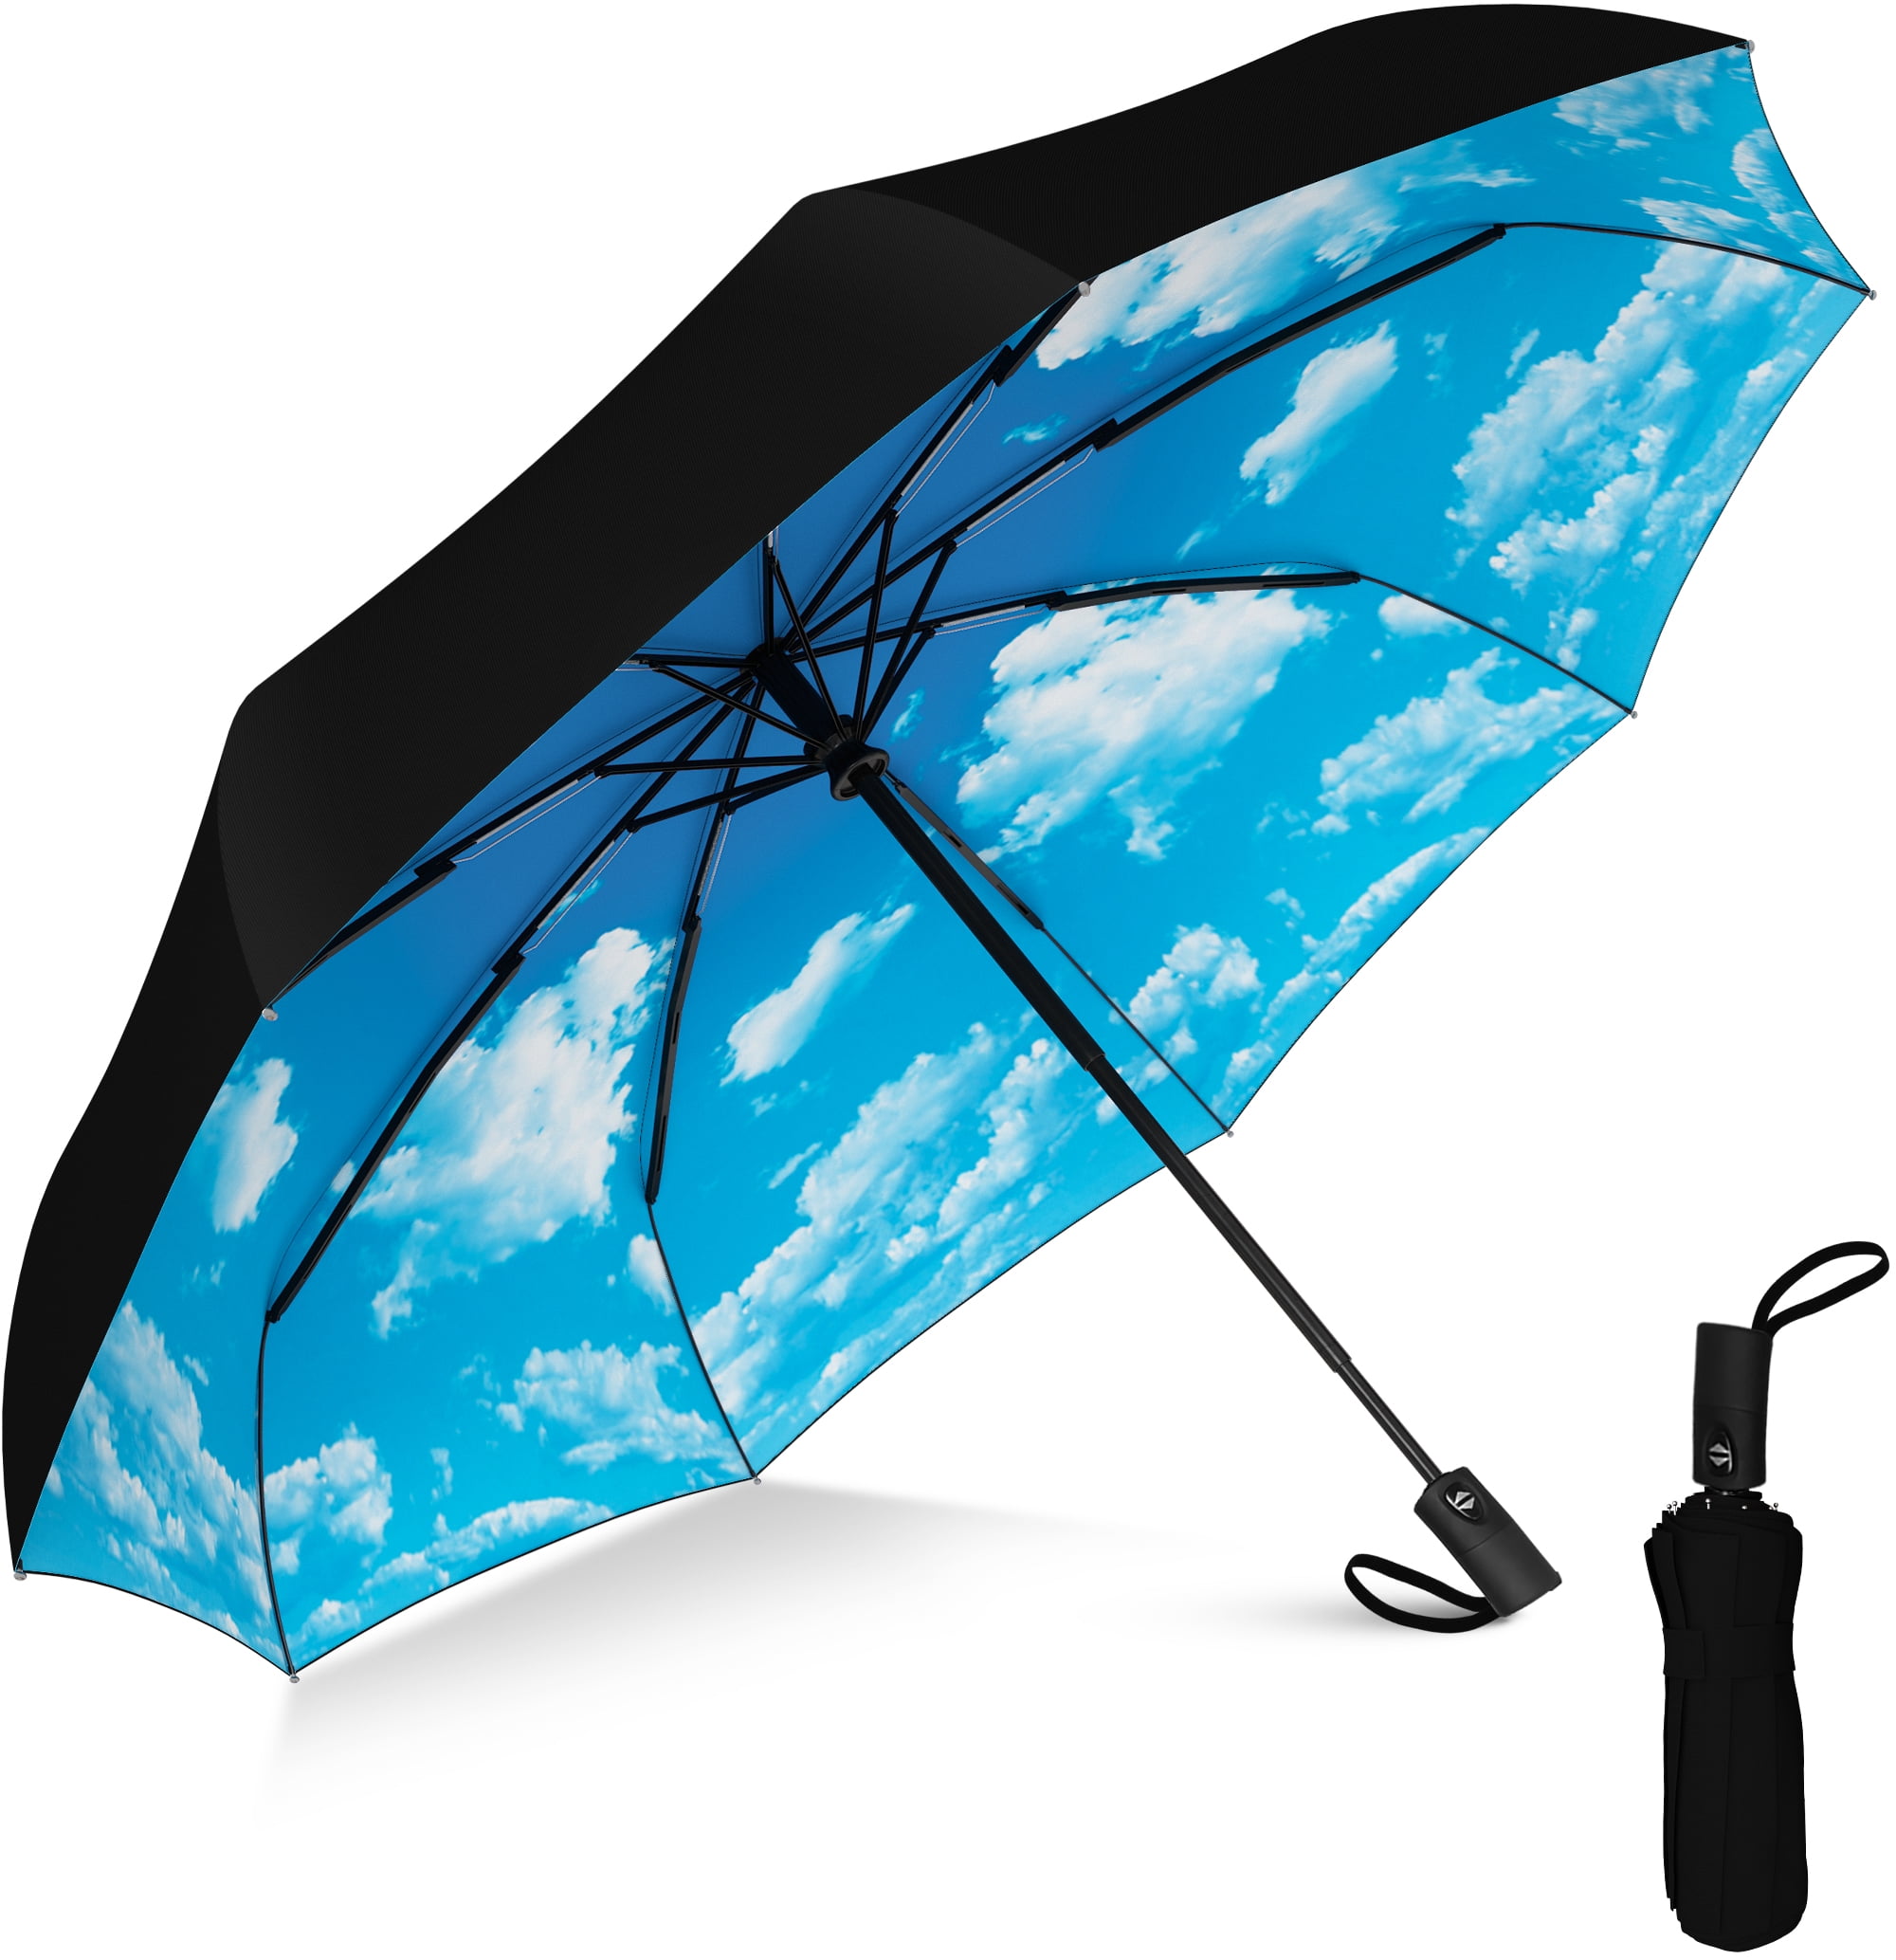 Automatic Travel Umbrella Auto Open Close Compact Folding Rain Windproof Strong 